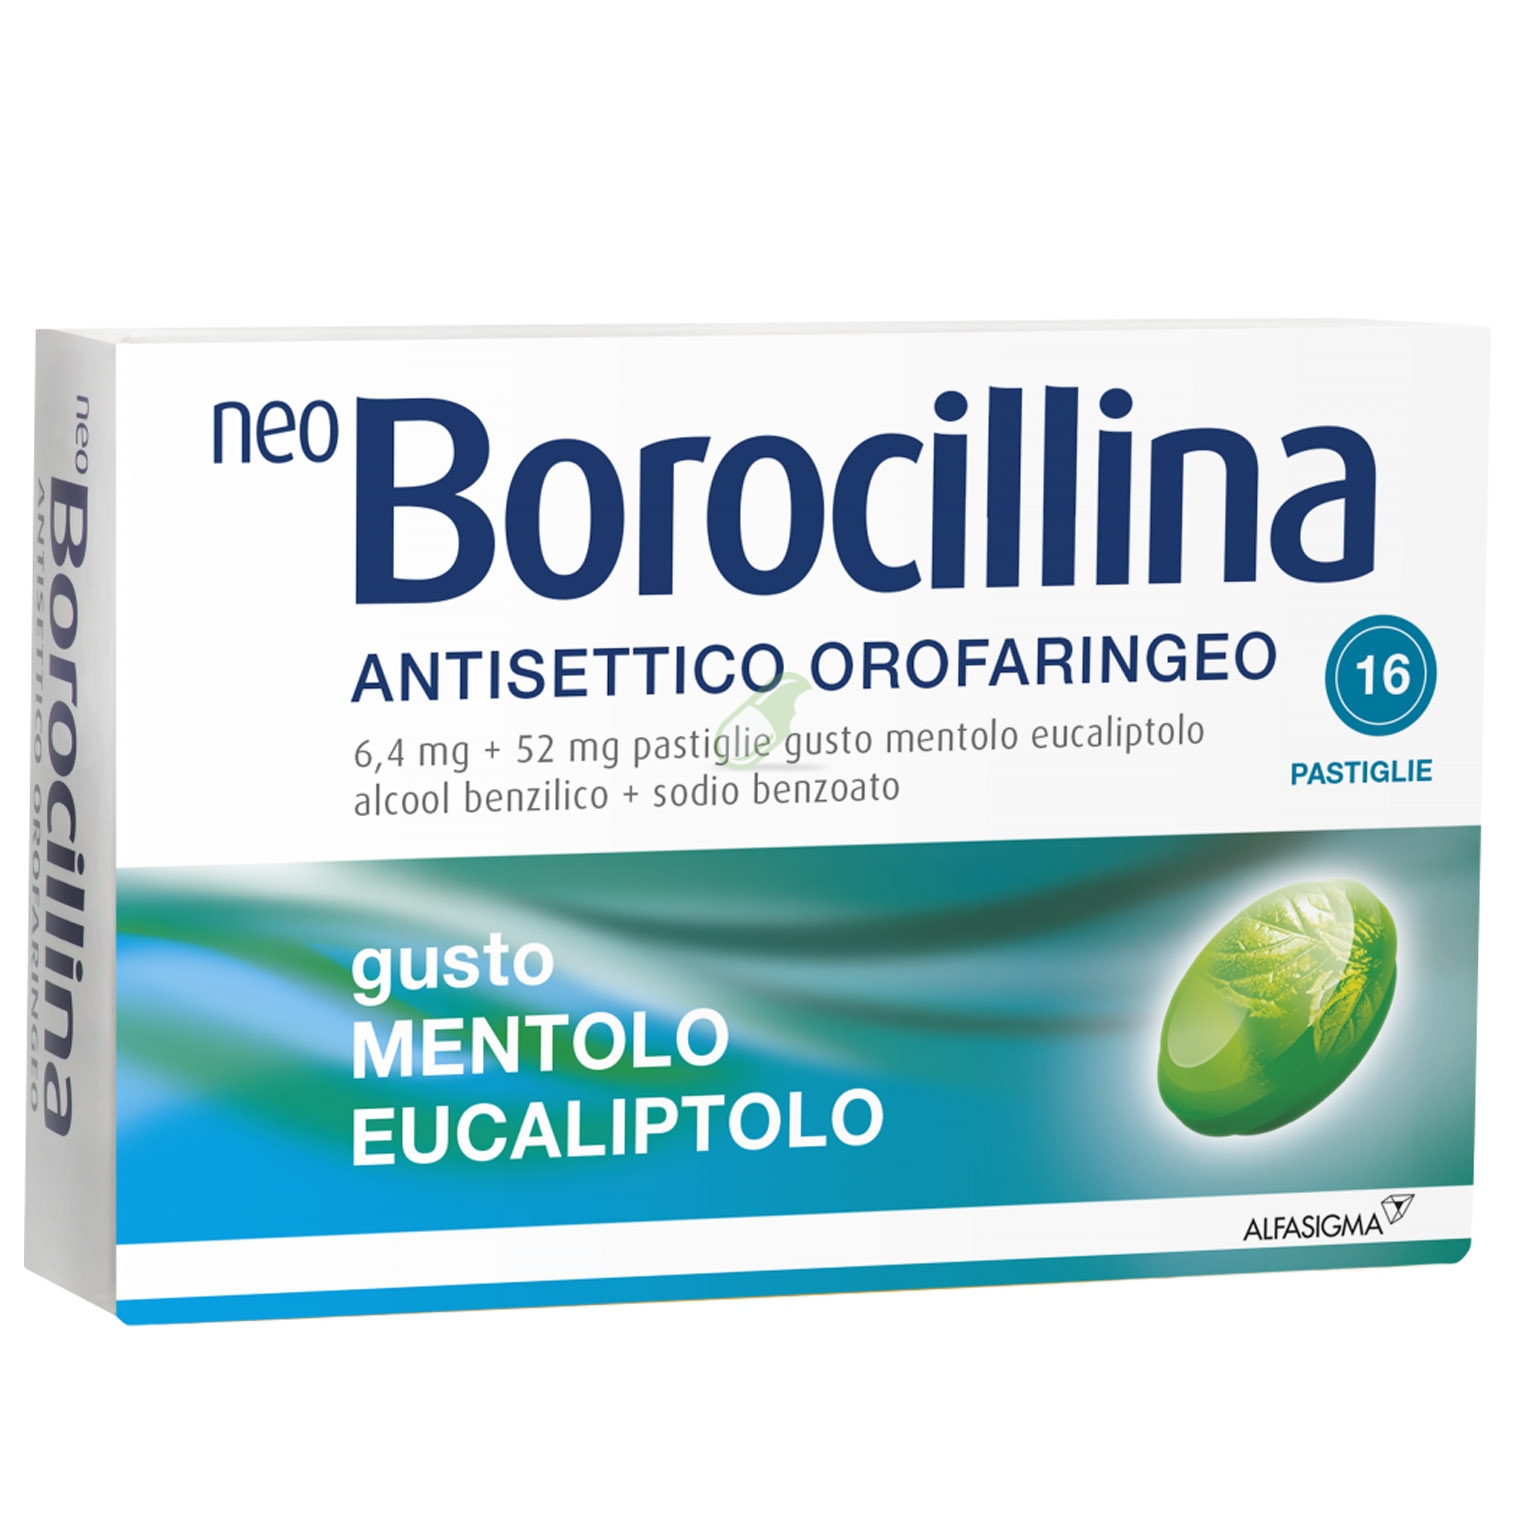 Neoborocillina Ant Or 6,4 Mg + 52 Mg Pastiglie Gusto Arancia, 16 Pastiglie  In Blister Al/Pvc